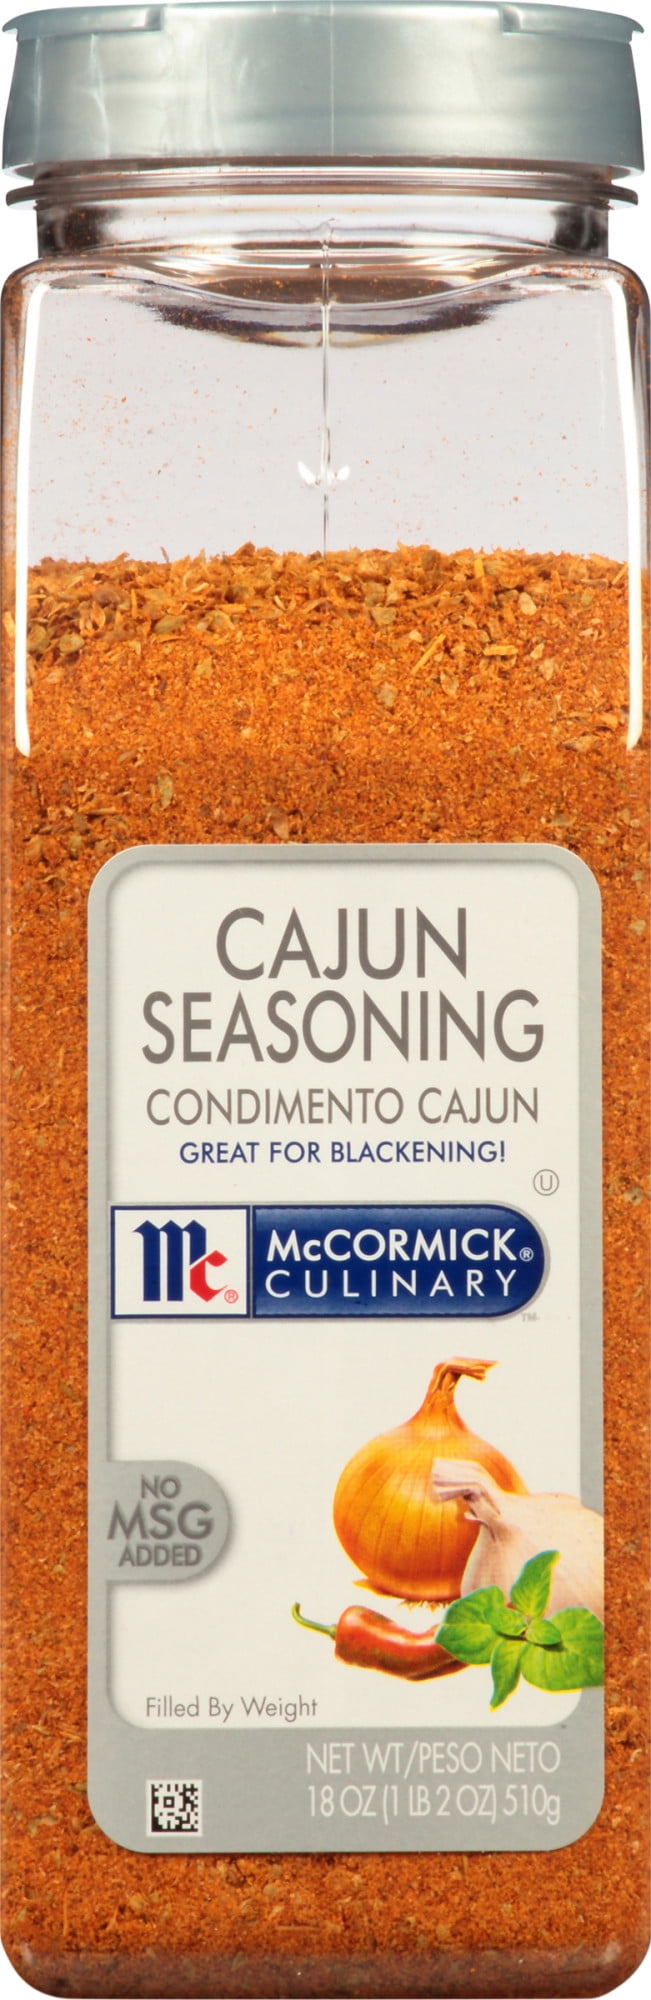 McCormick Culinary Seasoning, Cajun 18 oz, Shop